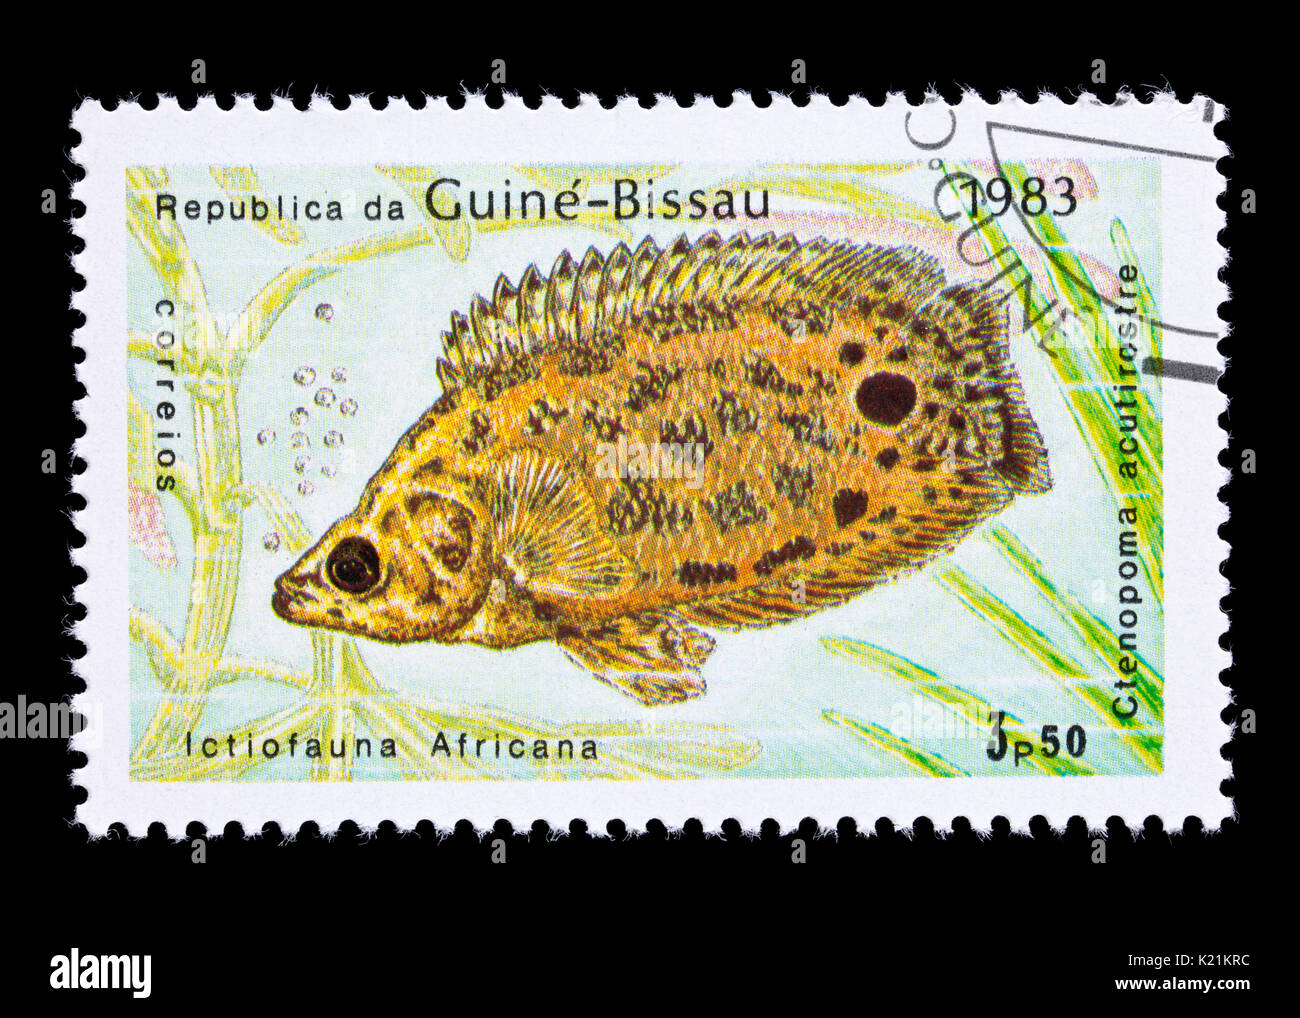 Postage stamp from Guinea-Bissau depicting a leopard bushfish (Ctenopoma acutirostre) Stock Photo